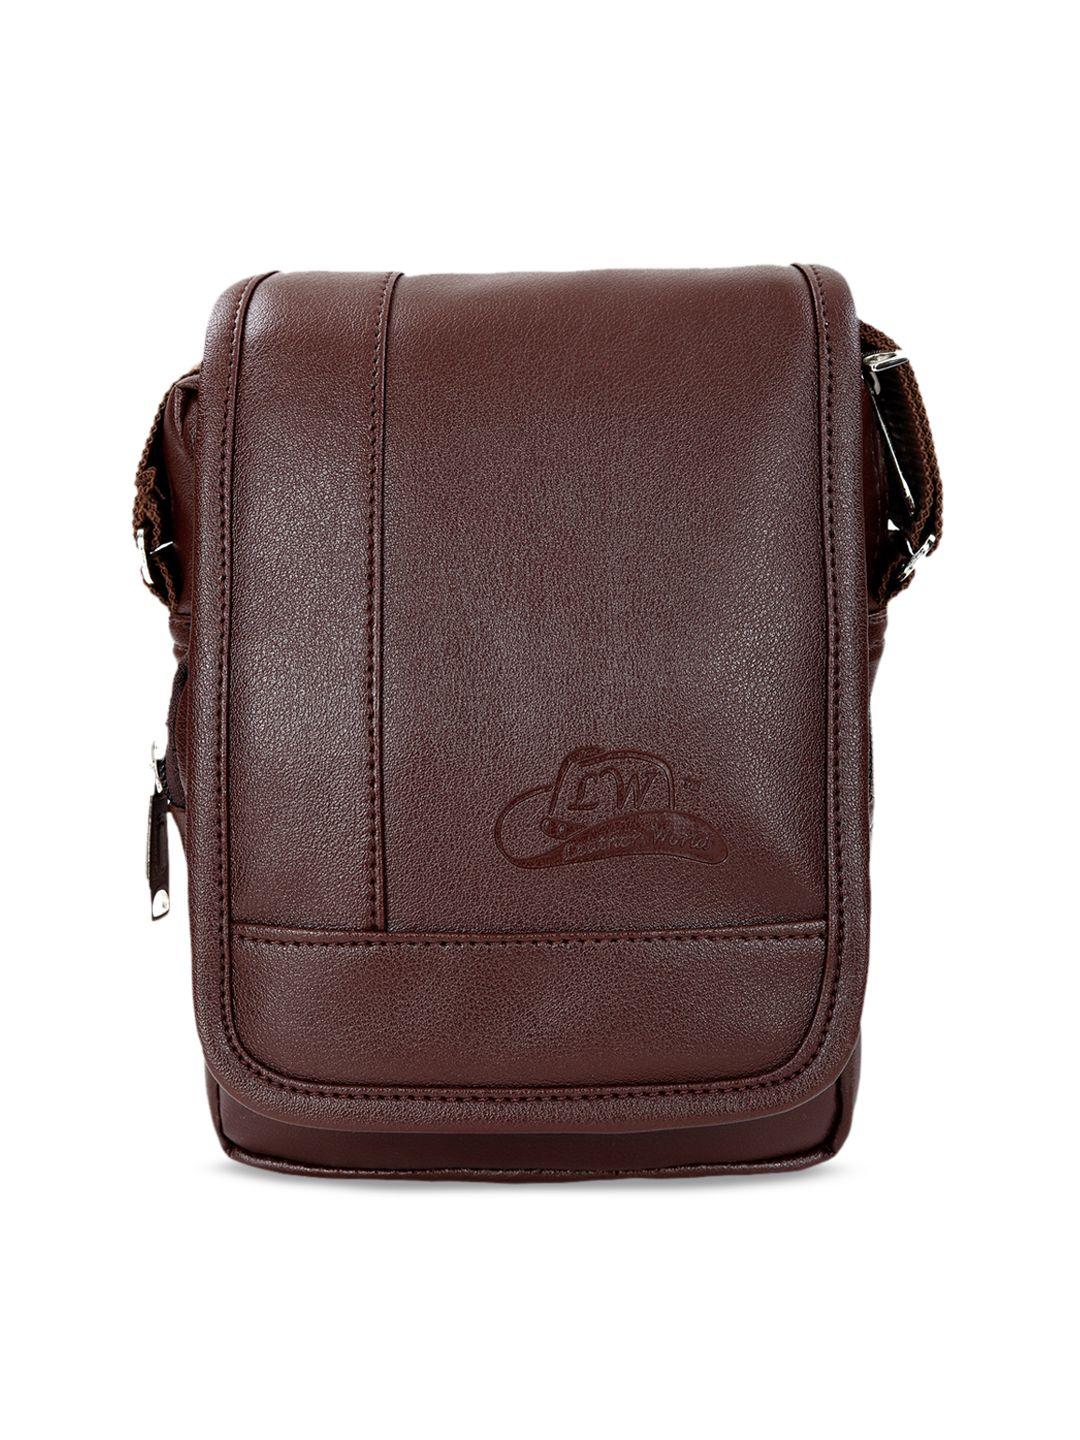 leather world brown solid sling bag